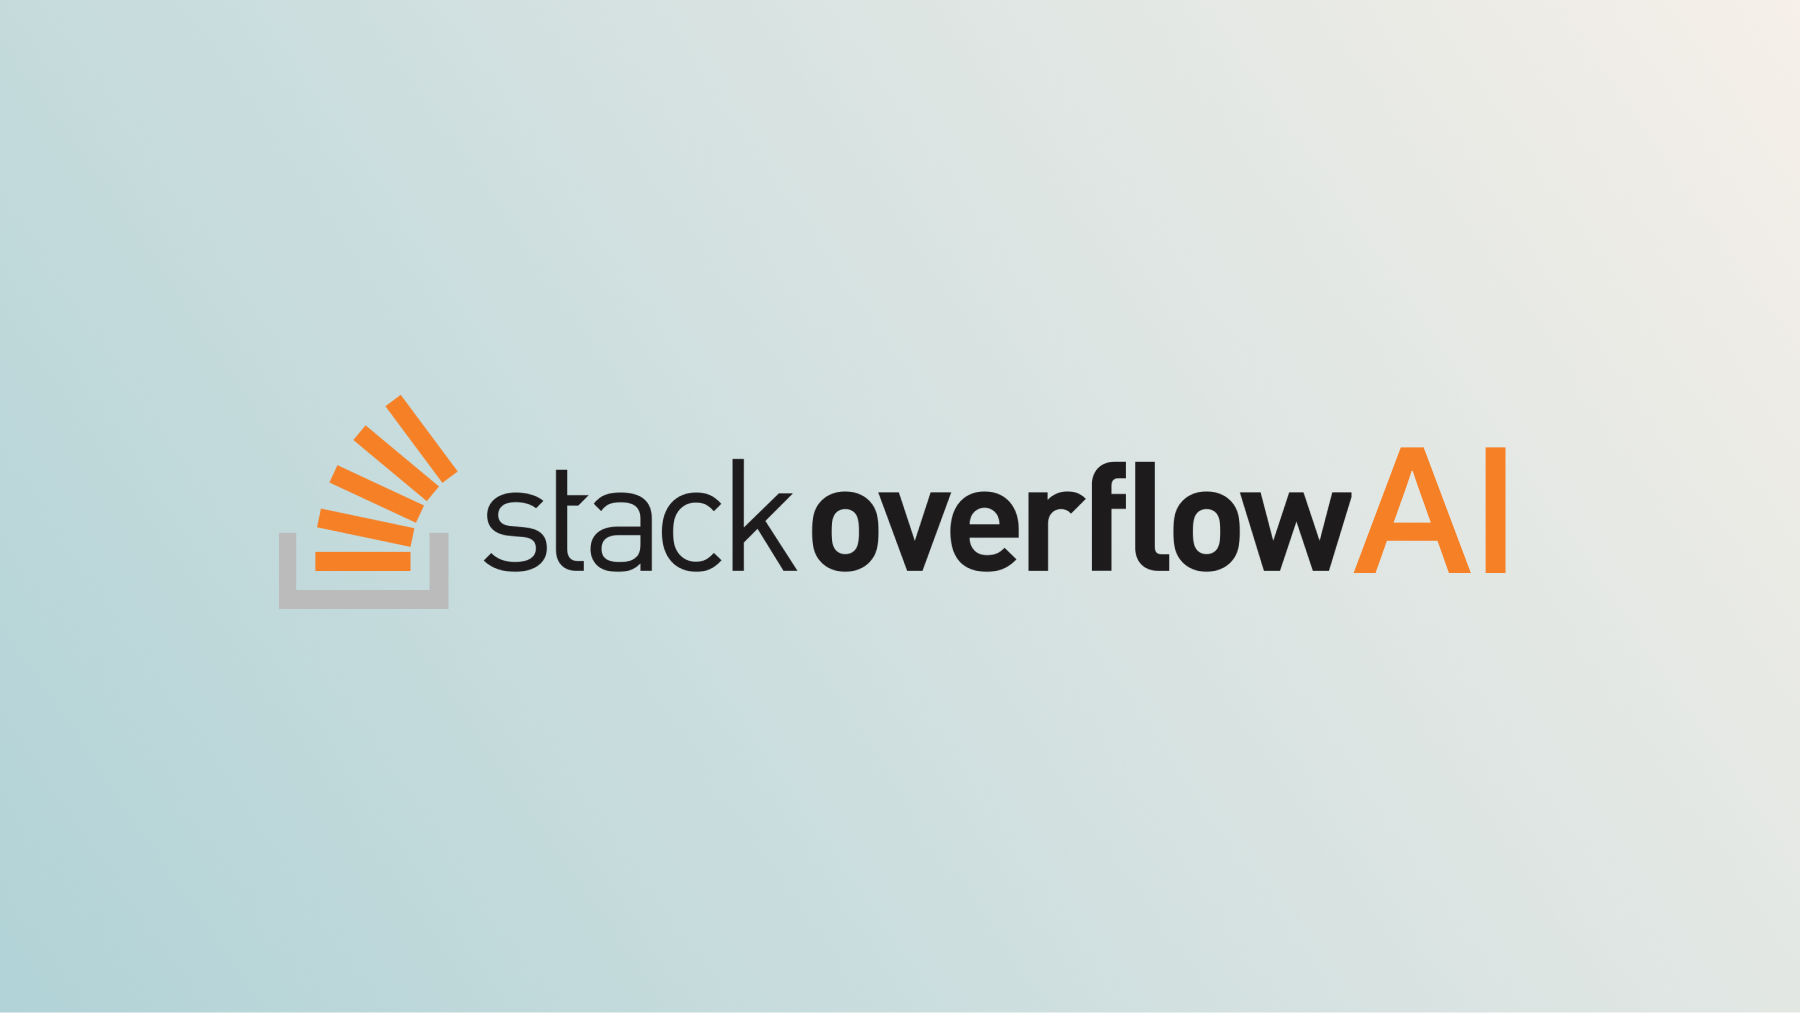 Stack overflow stackoverflow apps platform - Social media & Logos Icons